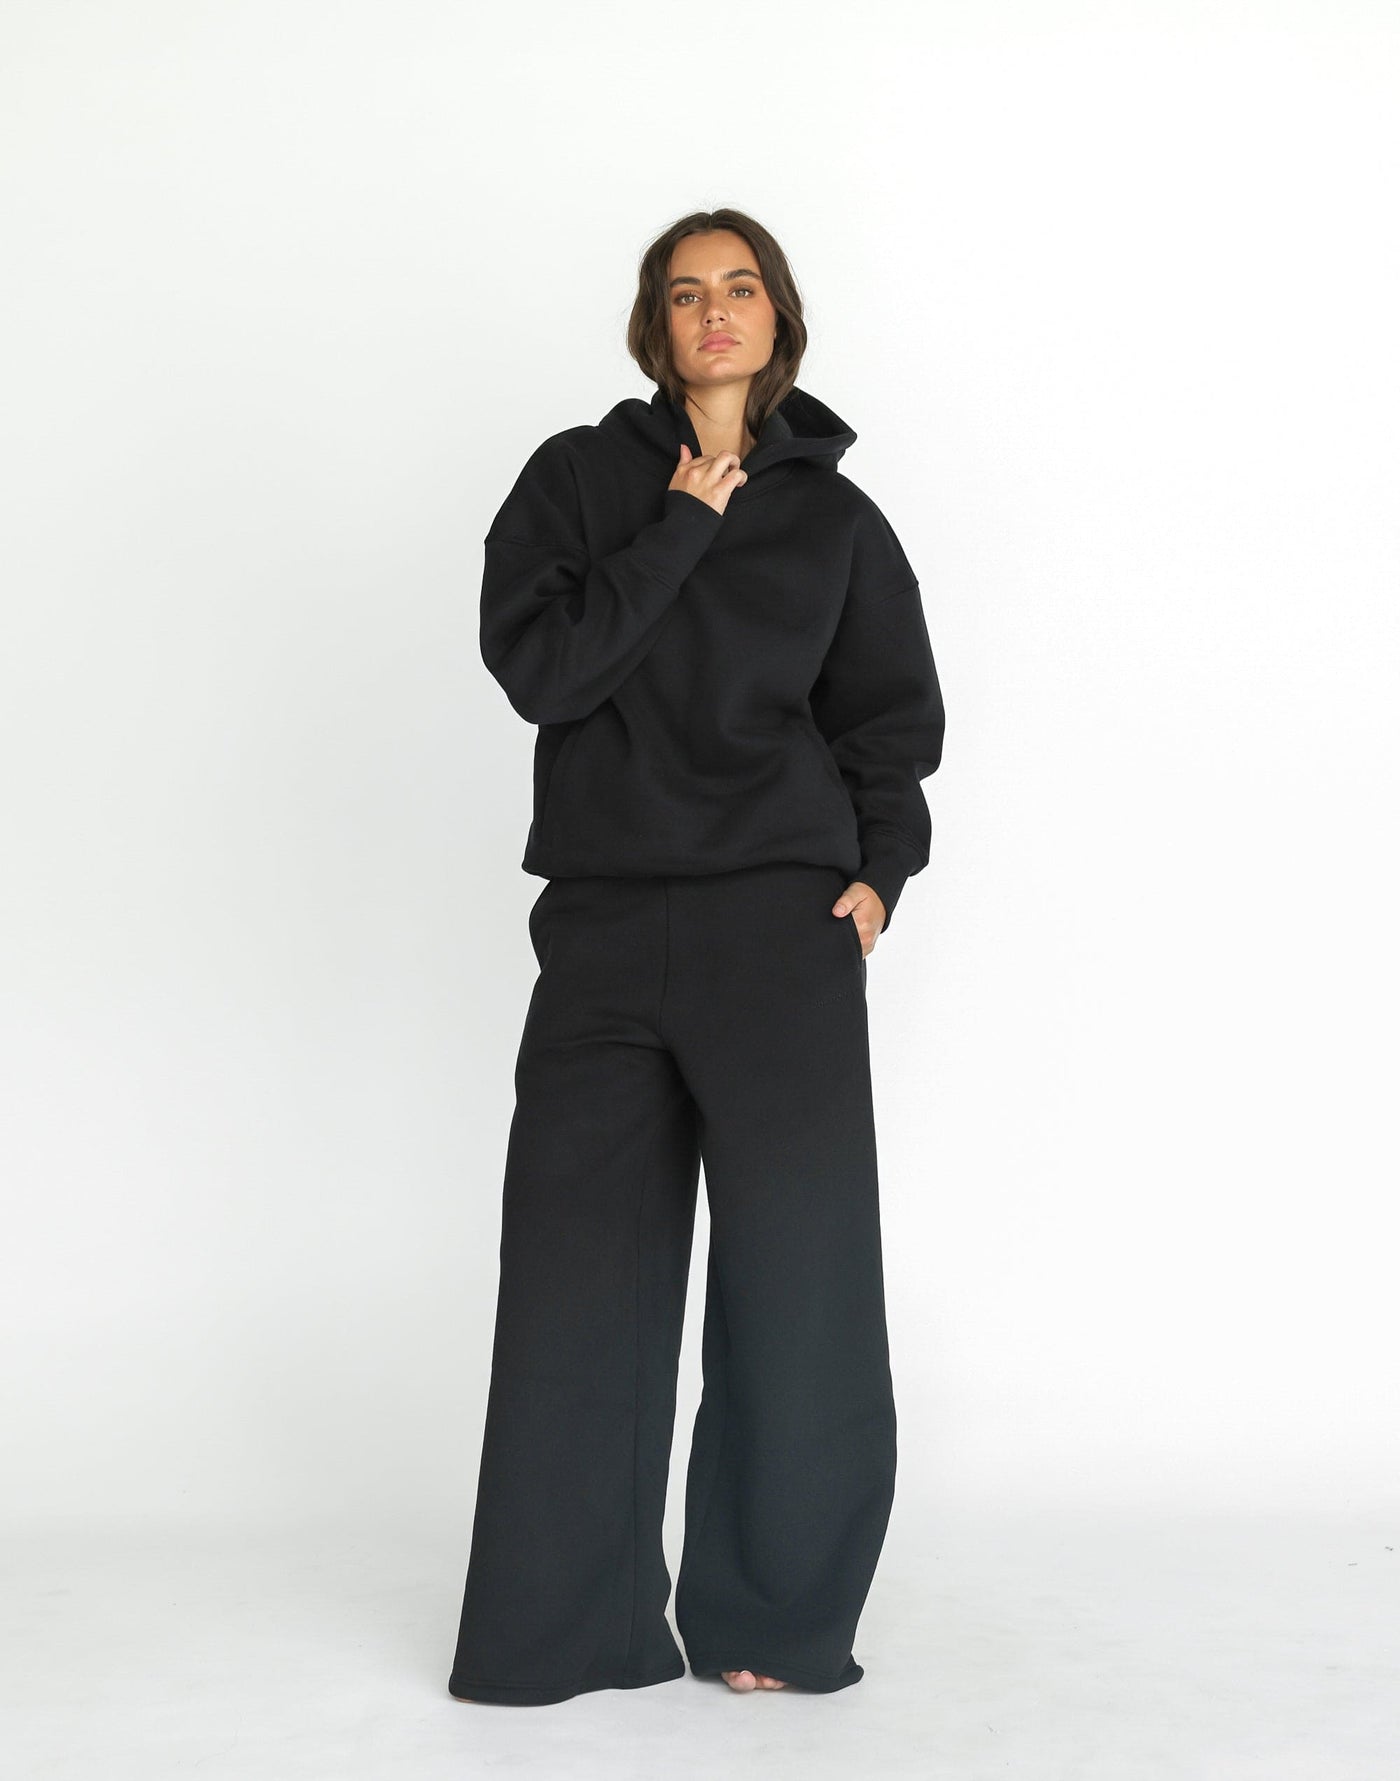 Noah Hoodie (Black) | CHARCOAL Exclusive - Oversized Dual Pocket Fleece Lined Hoodie - Women's Top - Charcoal Clothing